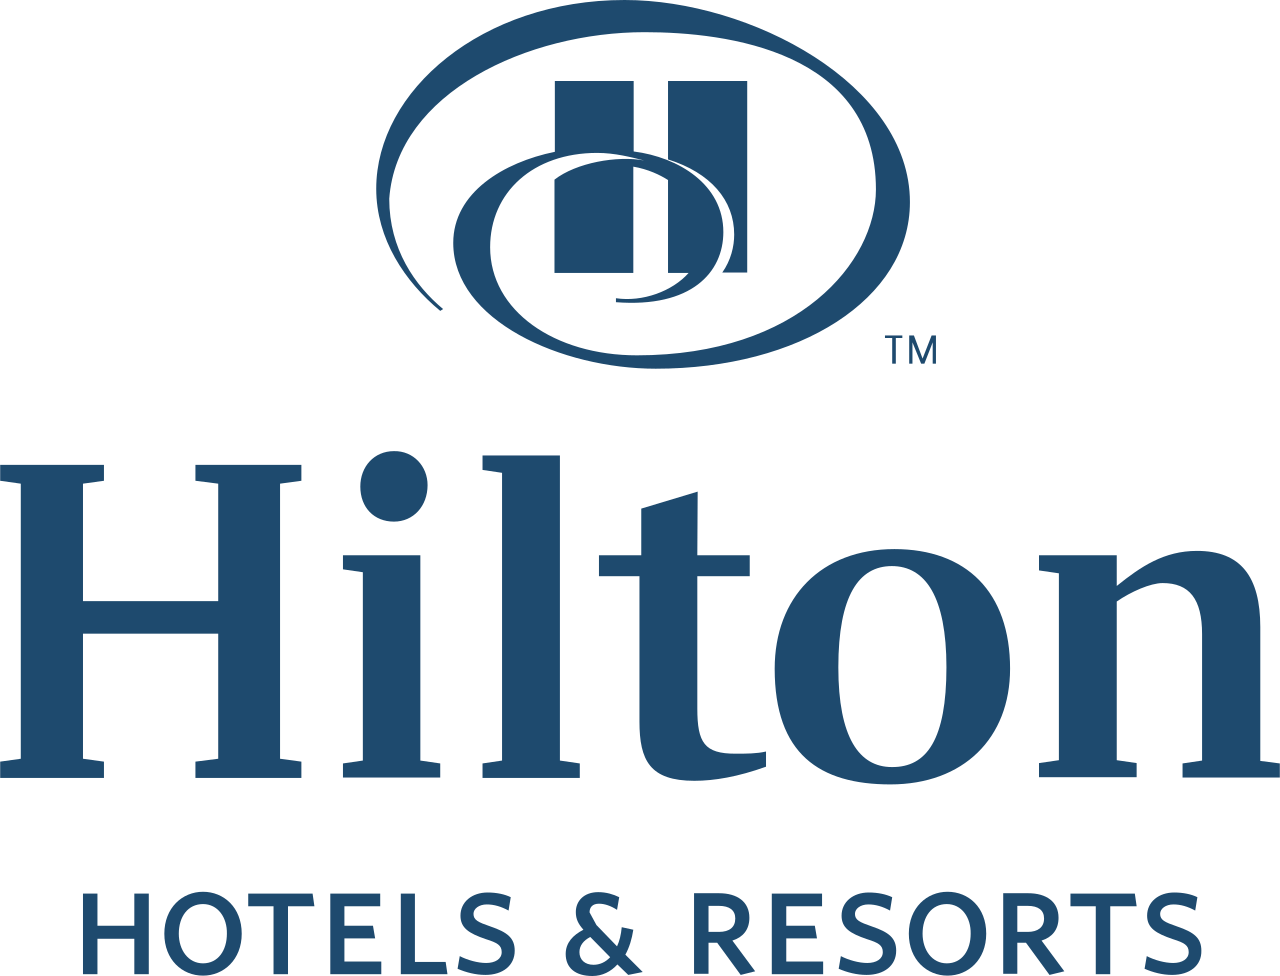 Hilton Hotels and resorts